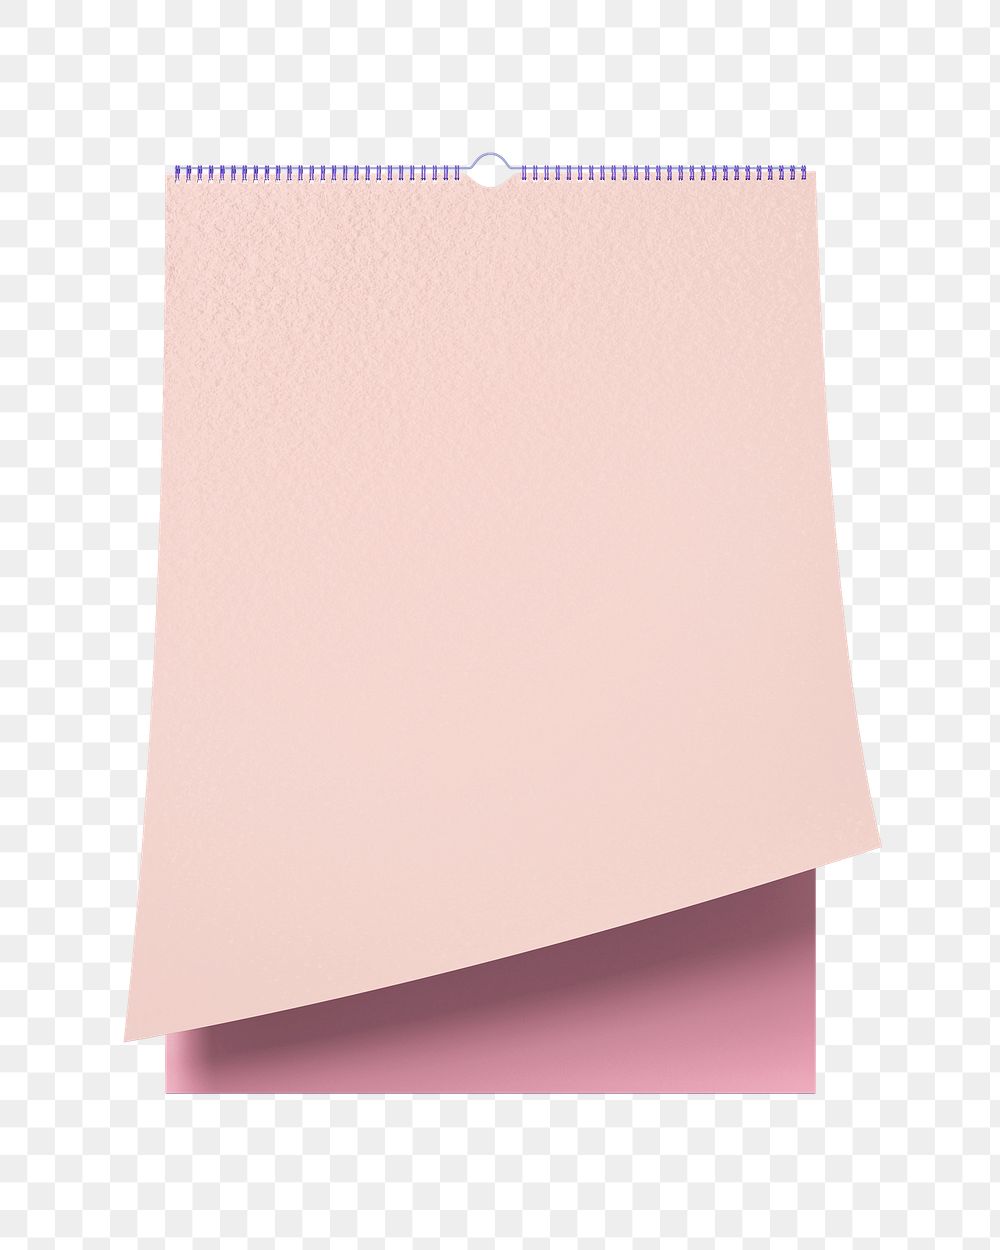 Wall calendar png sticker, pink design, transparent background